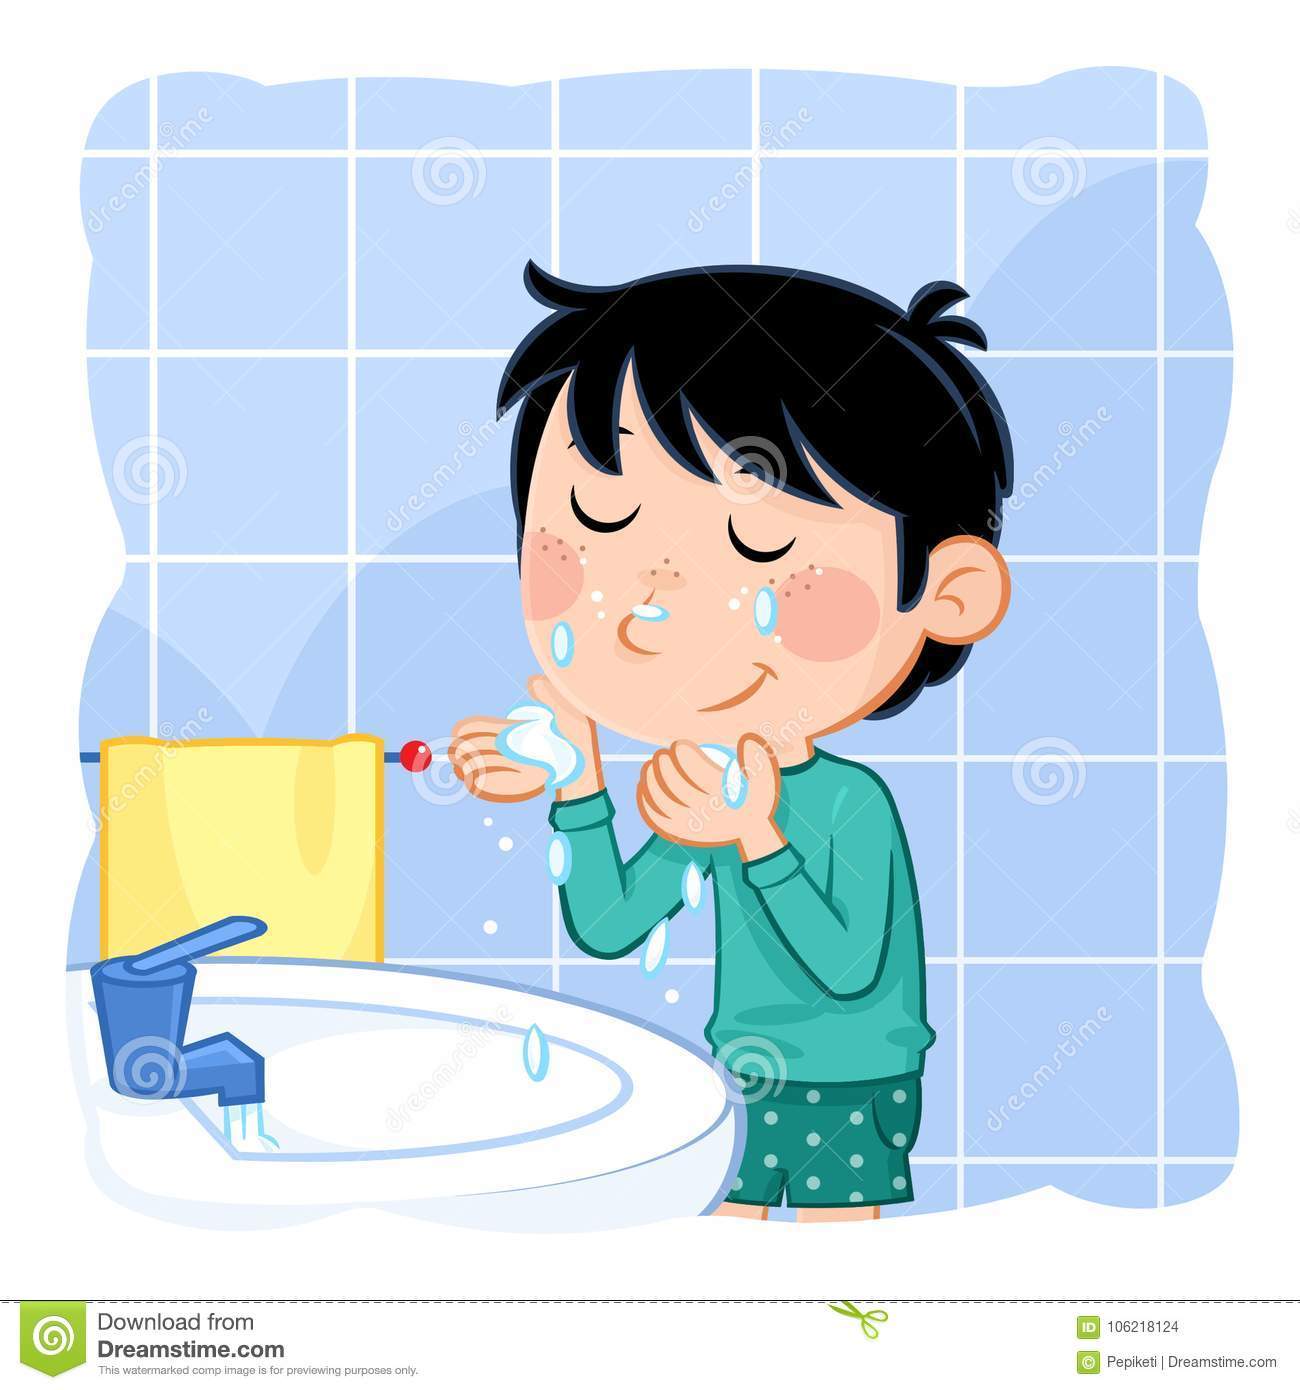 Boy washing face clipart 1 » Clipart Portal.